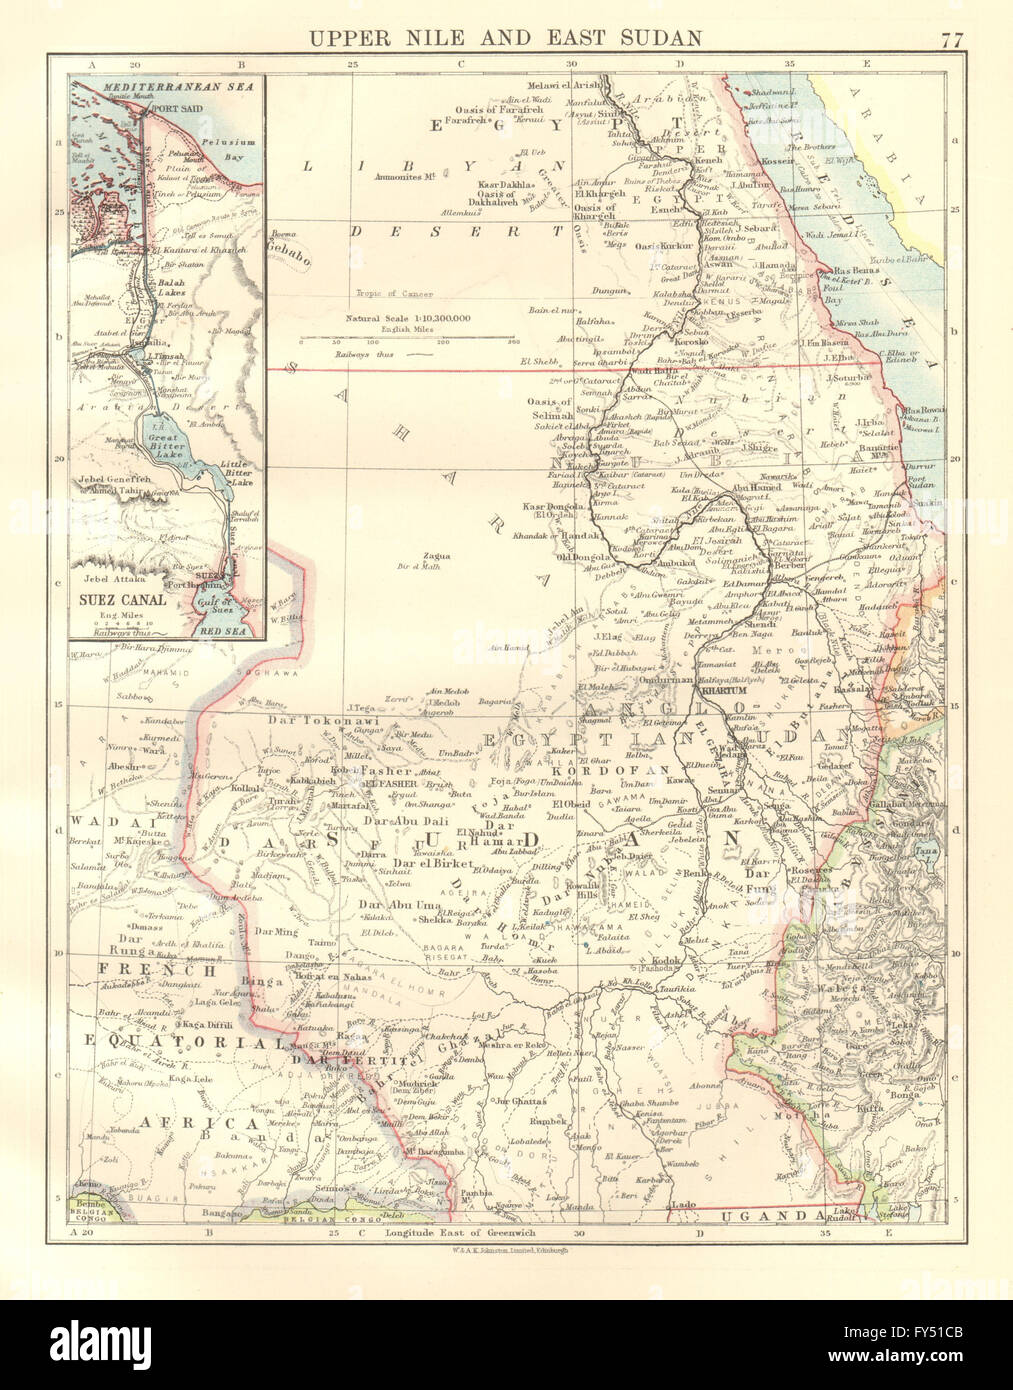 UPPER NILE, EAST SUDAN & SUEZ CANAL. Khartoum.White/Blue Nile. JOHNSTON 1920 map Stock Photo